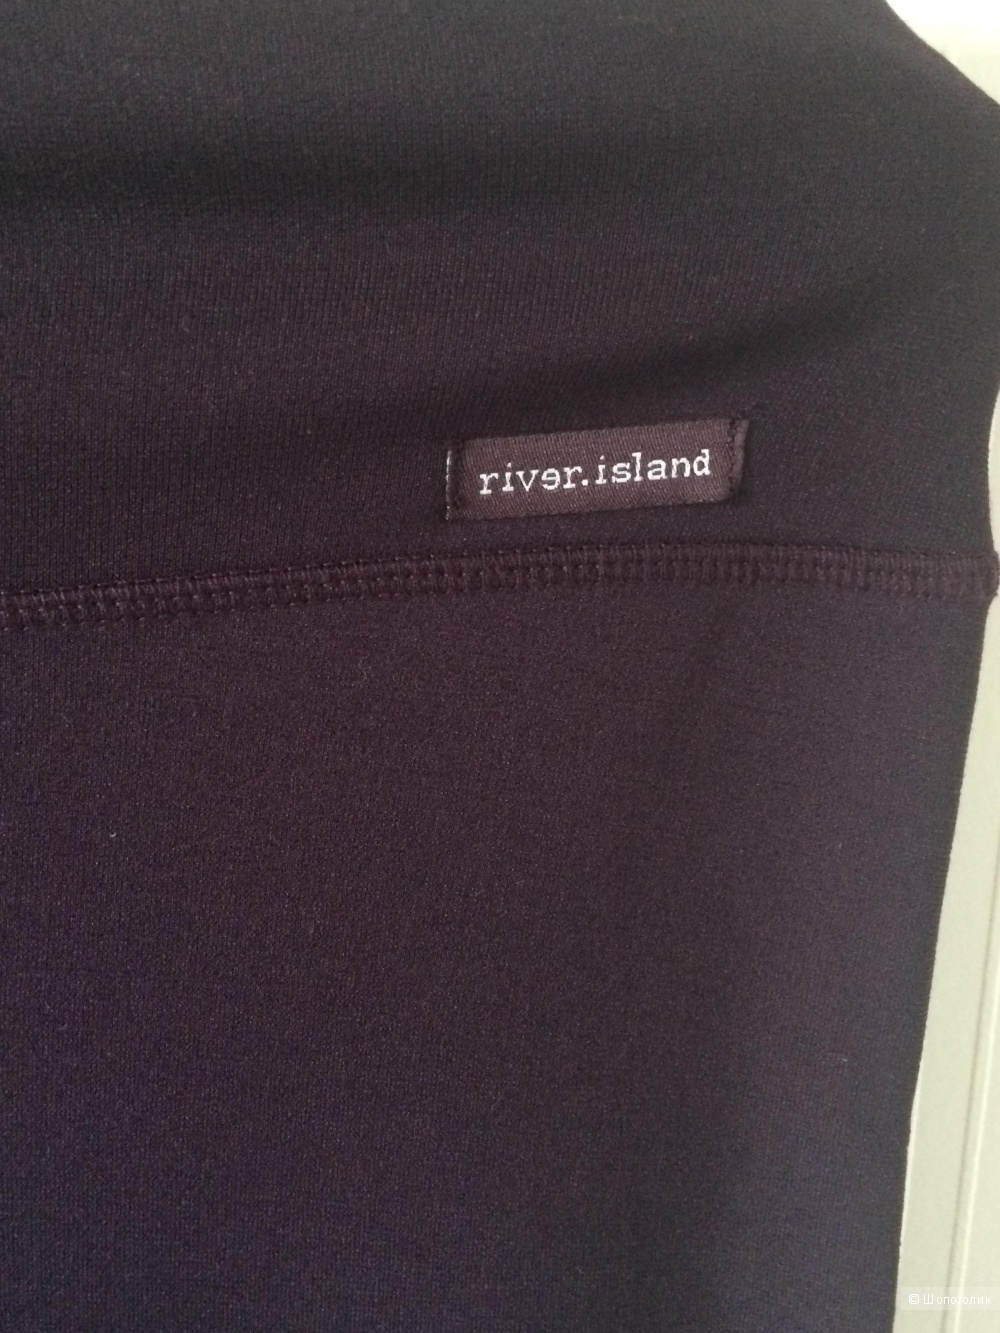 River island юбка-карандаш 44-46